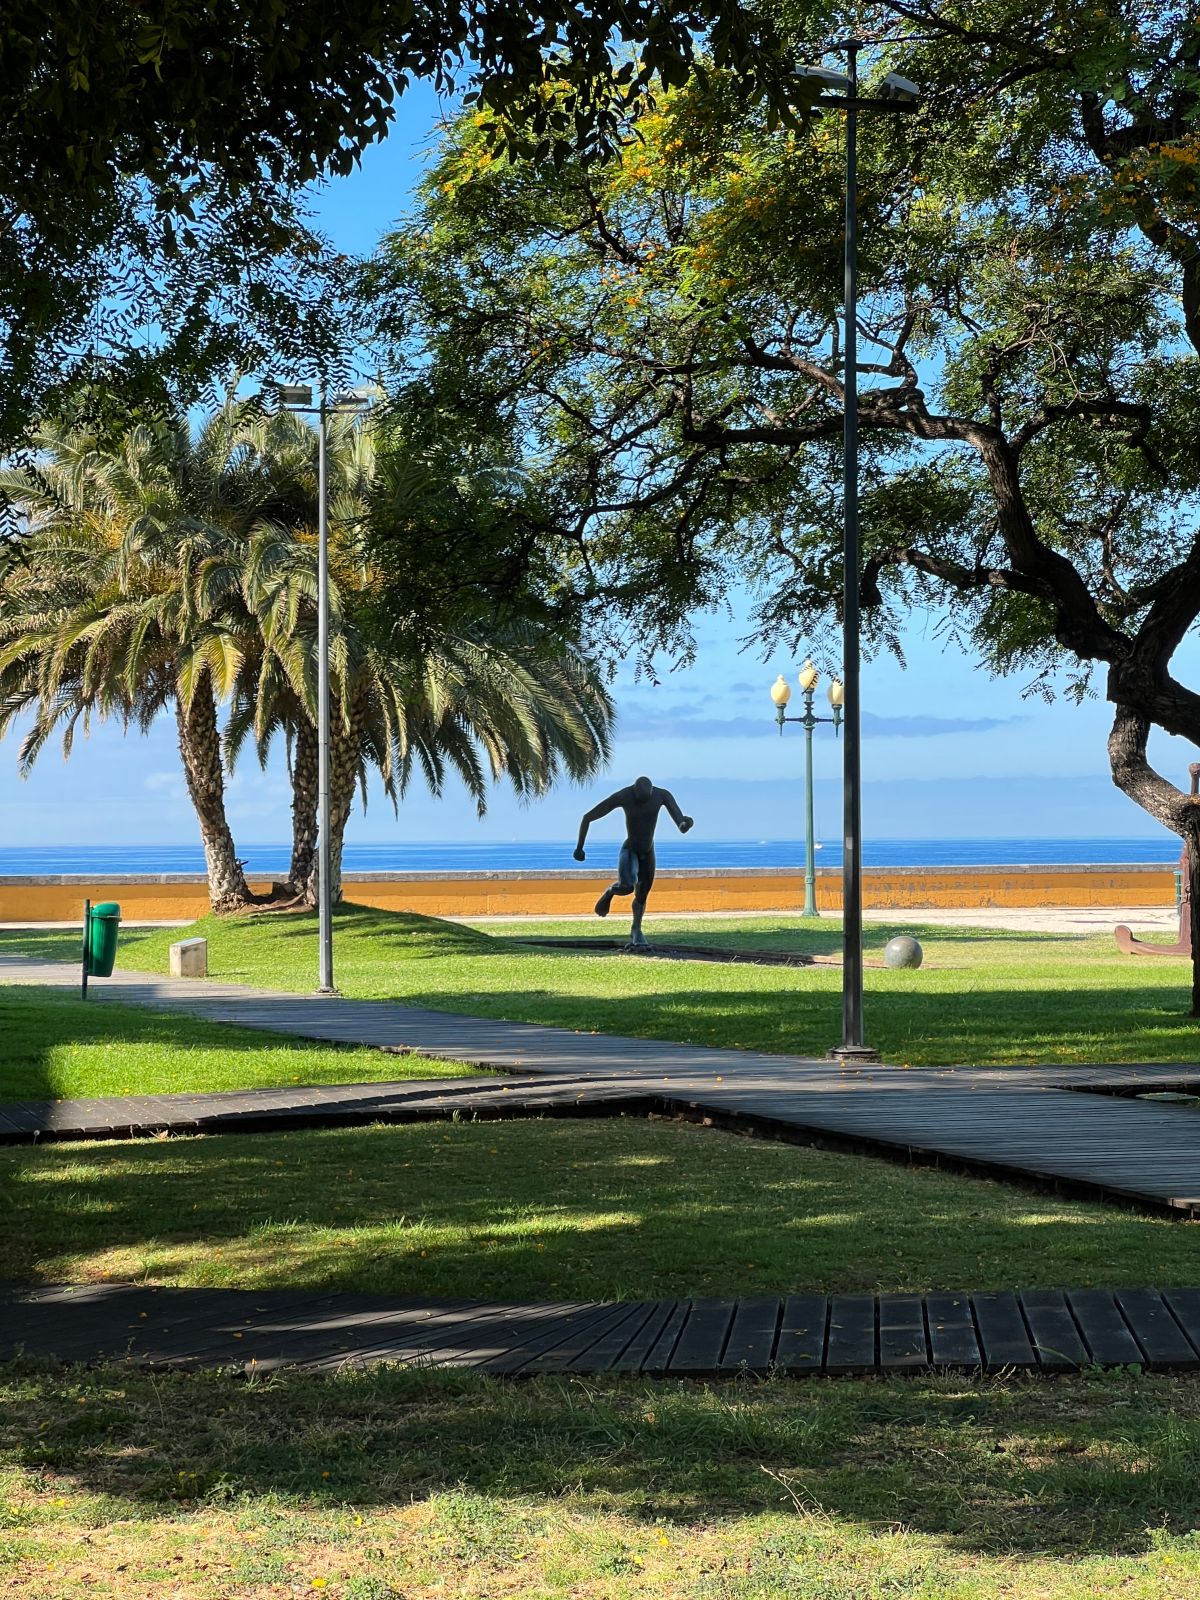 Statua piłkarza w Funchal w parku Jardin do Almirante Reis nad brzegiem oceanu